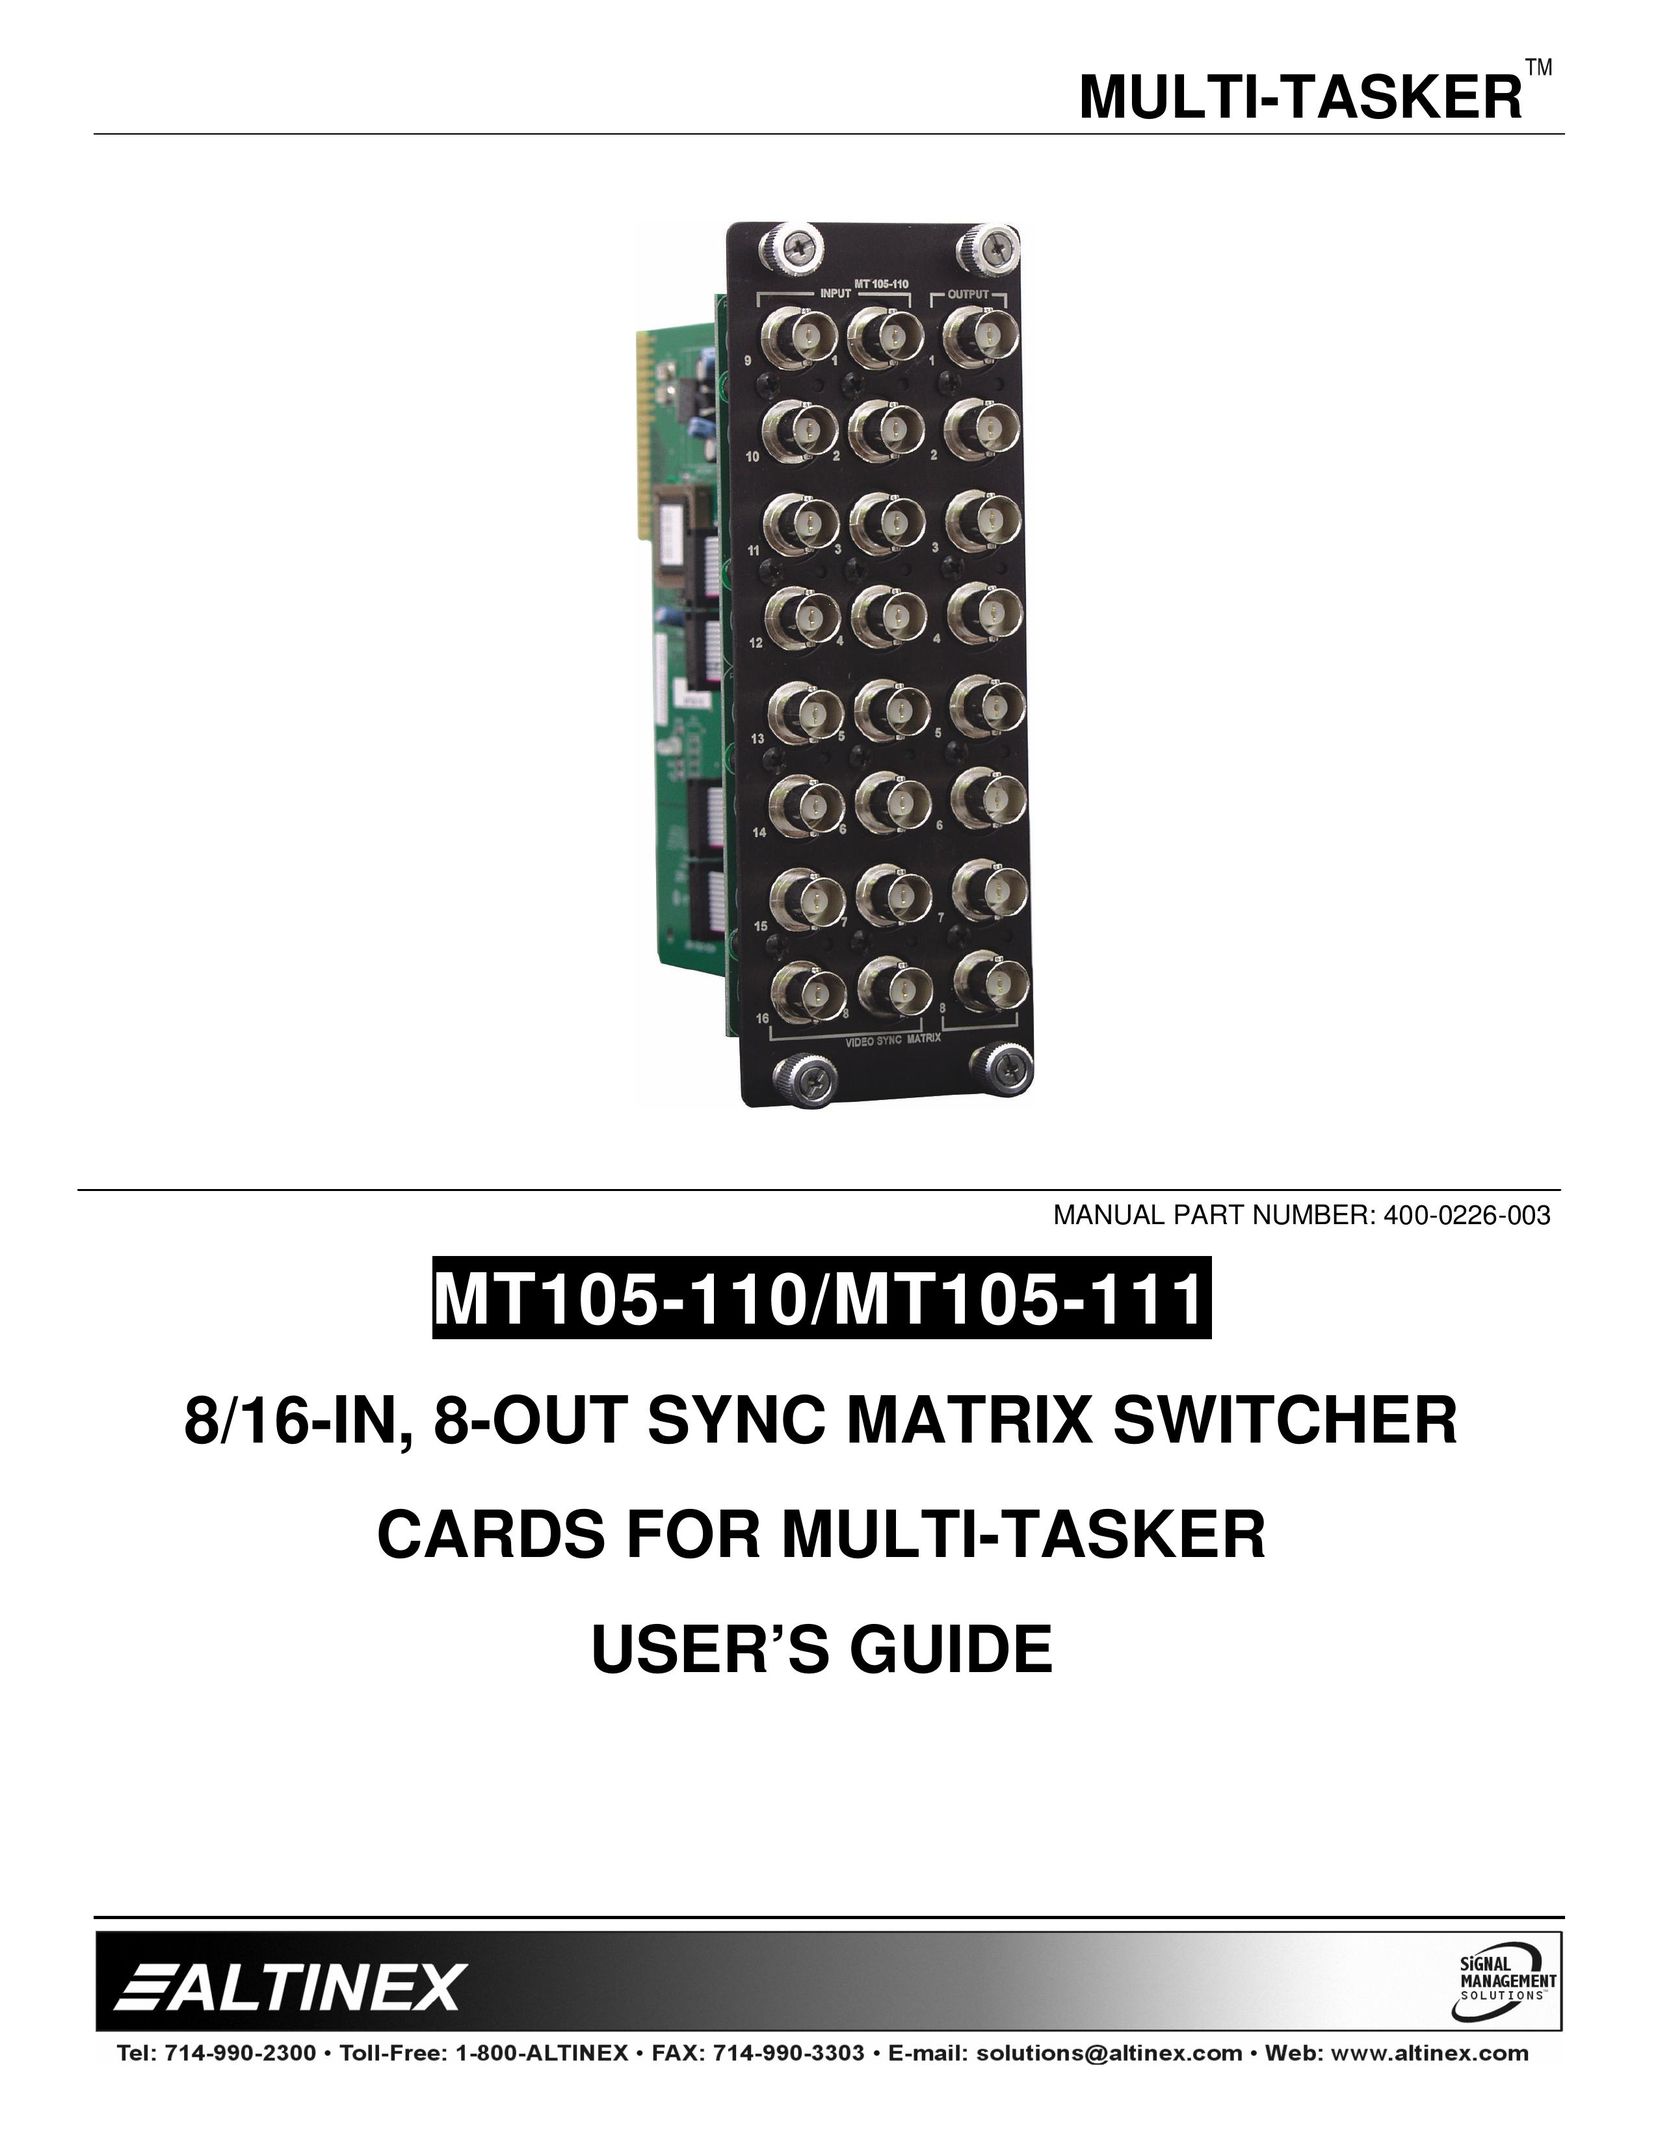 Altinex MT105-111 Switch User Manual